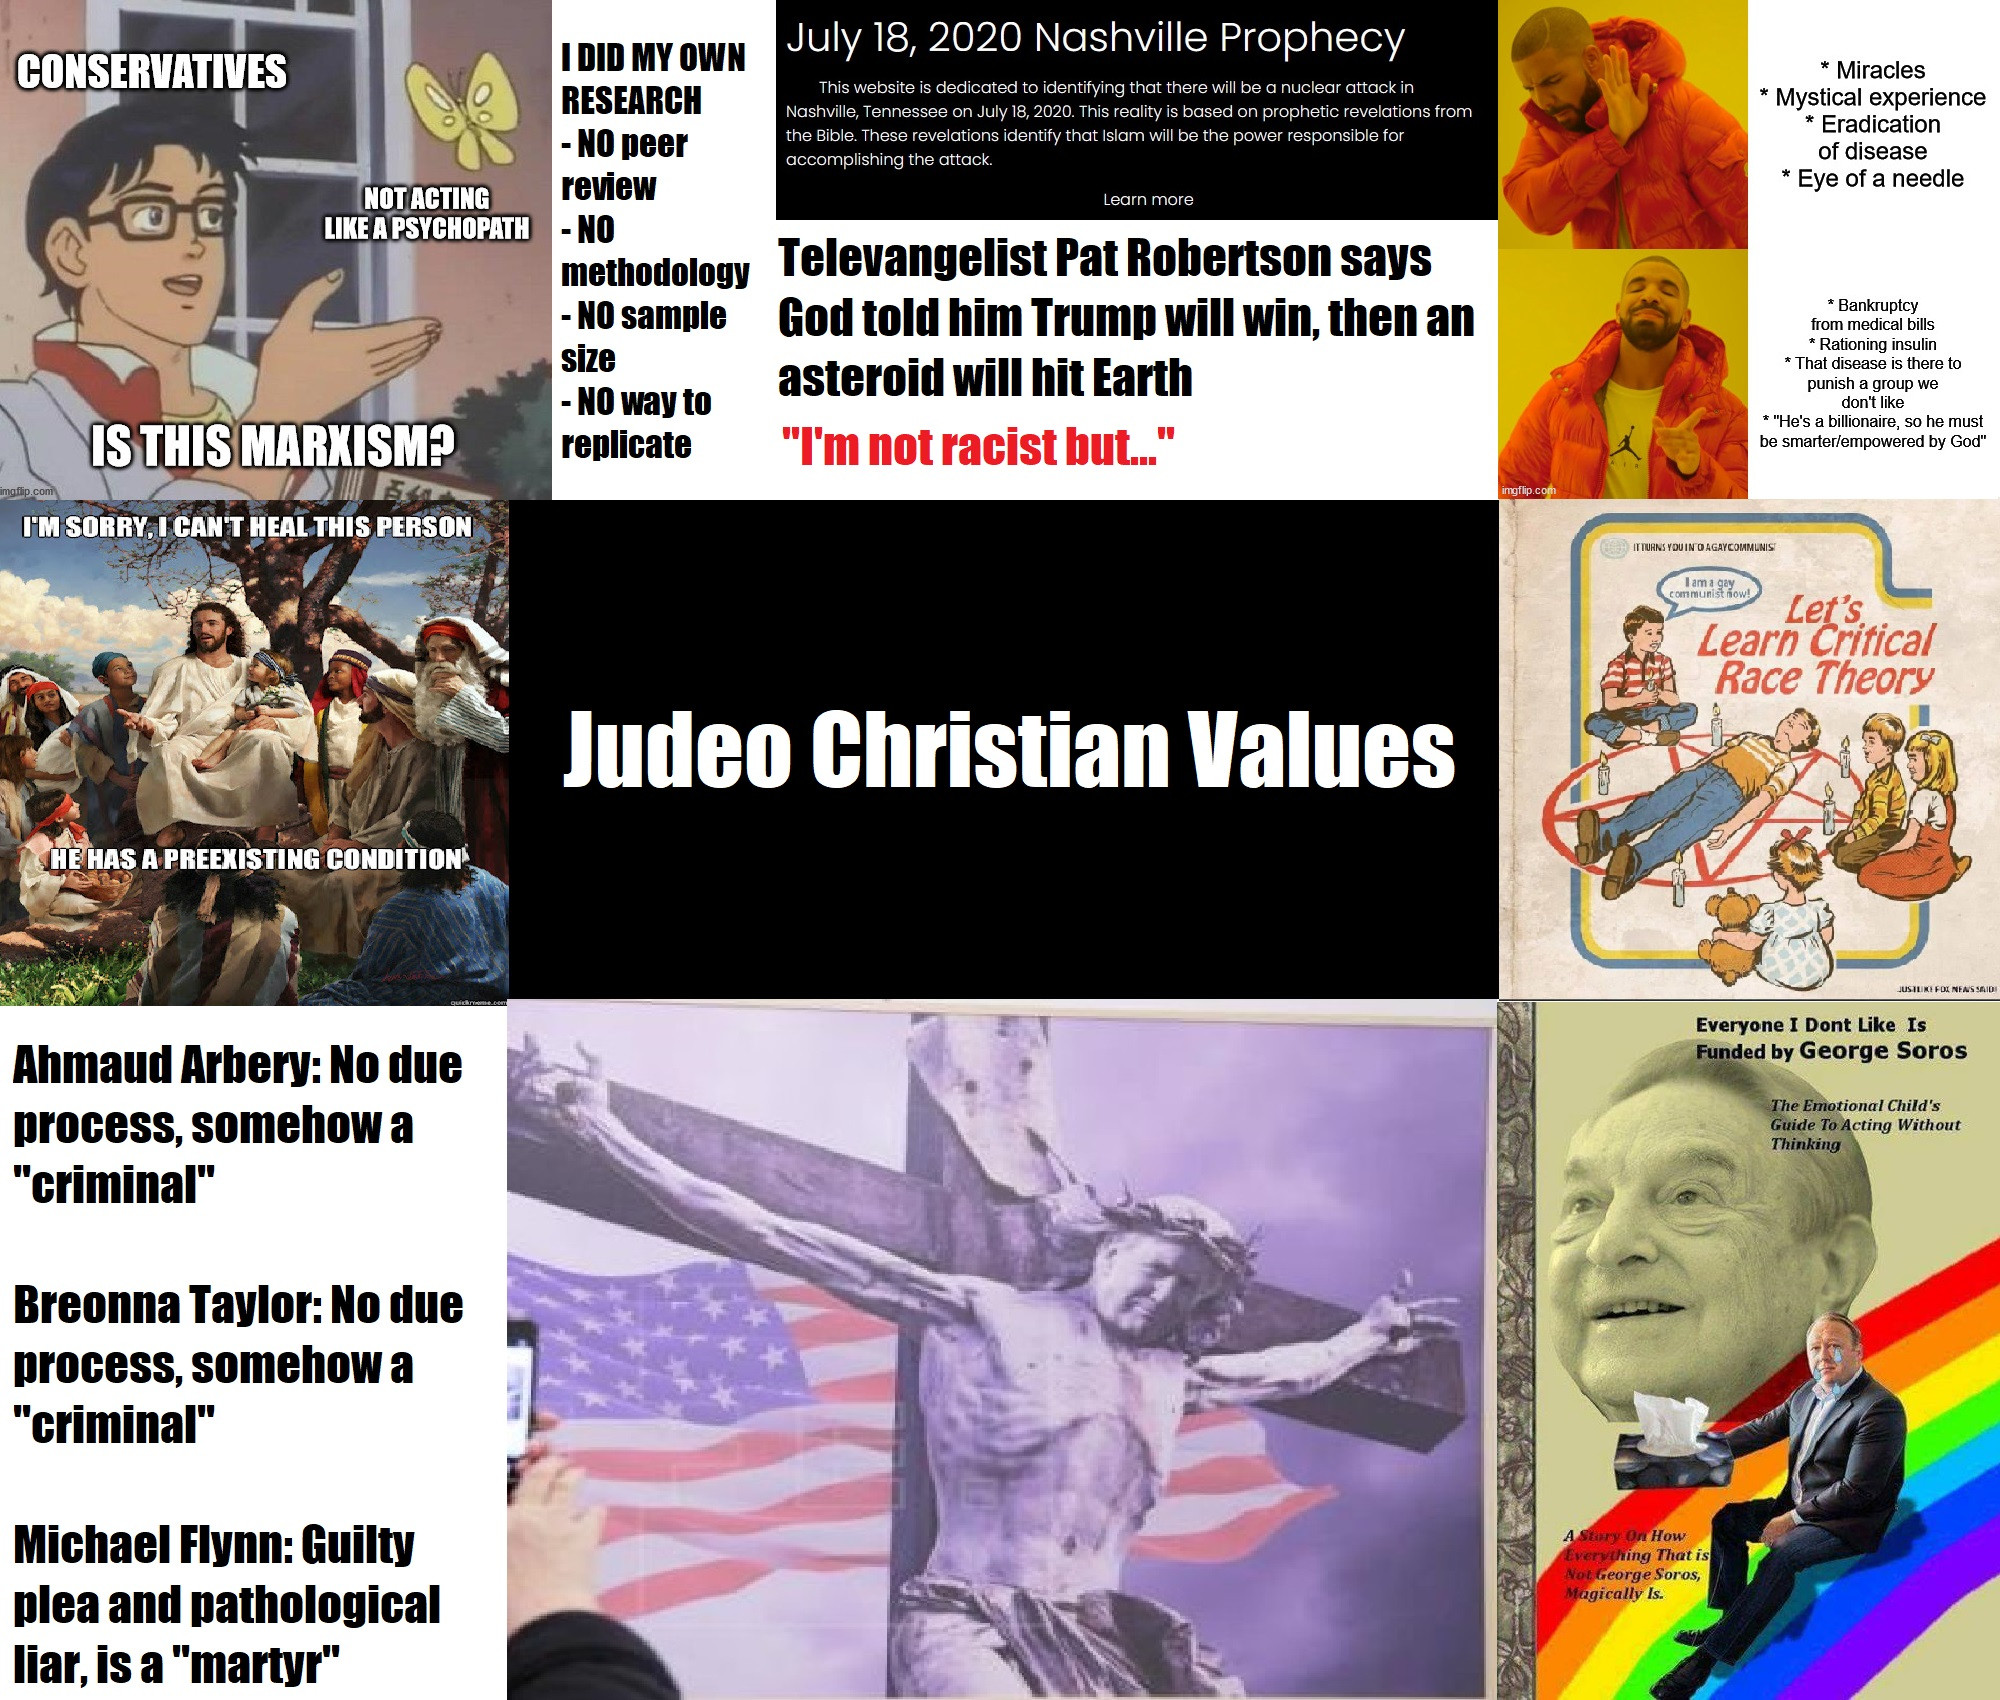 Judeo Christian Values